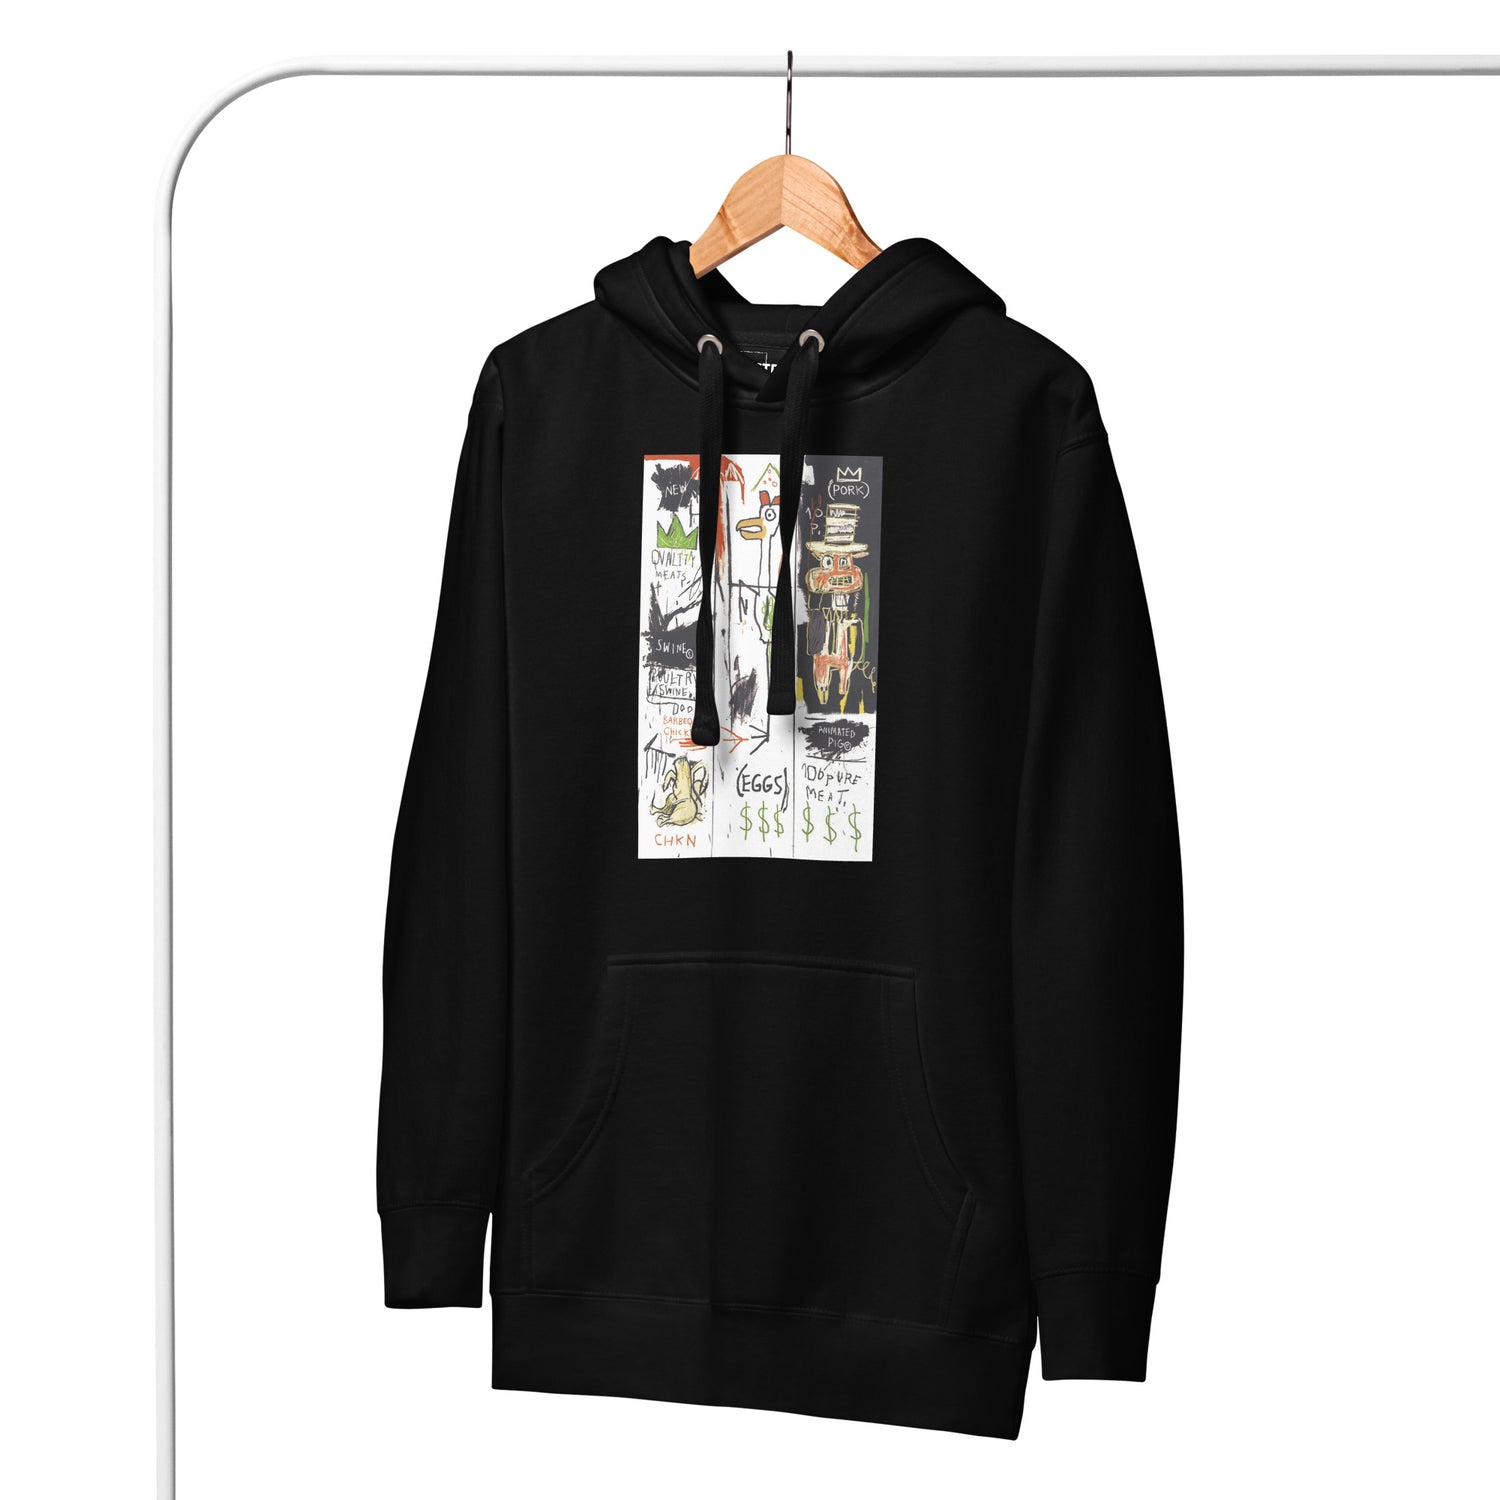 Jean-Michel Basquiat "Quality Meats for the Public" 1982 Artwork Printed Premium Streetwear Sweatshirt Hoodie Black